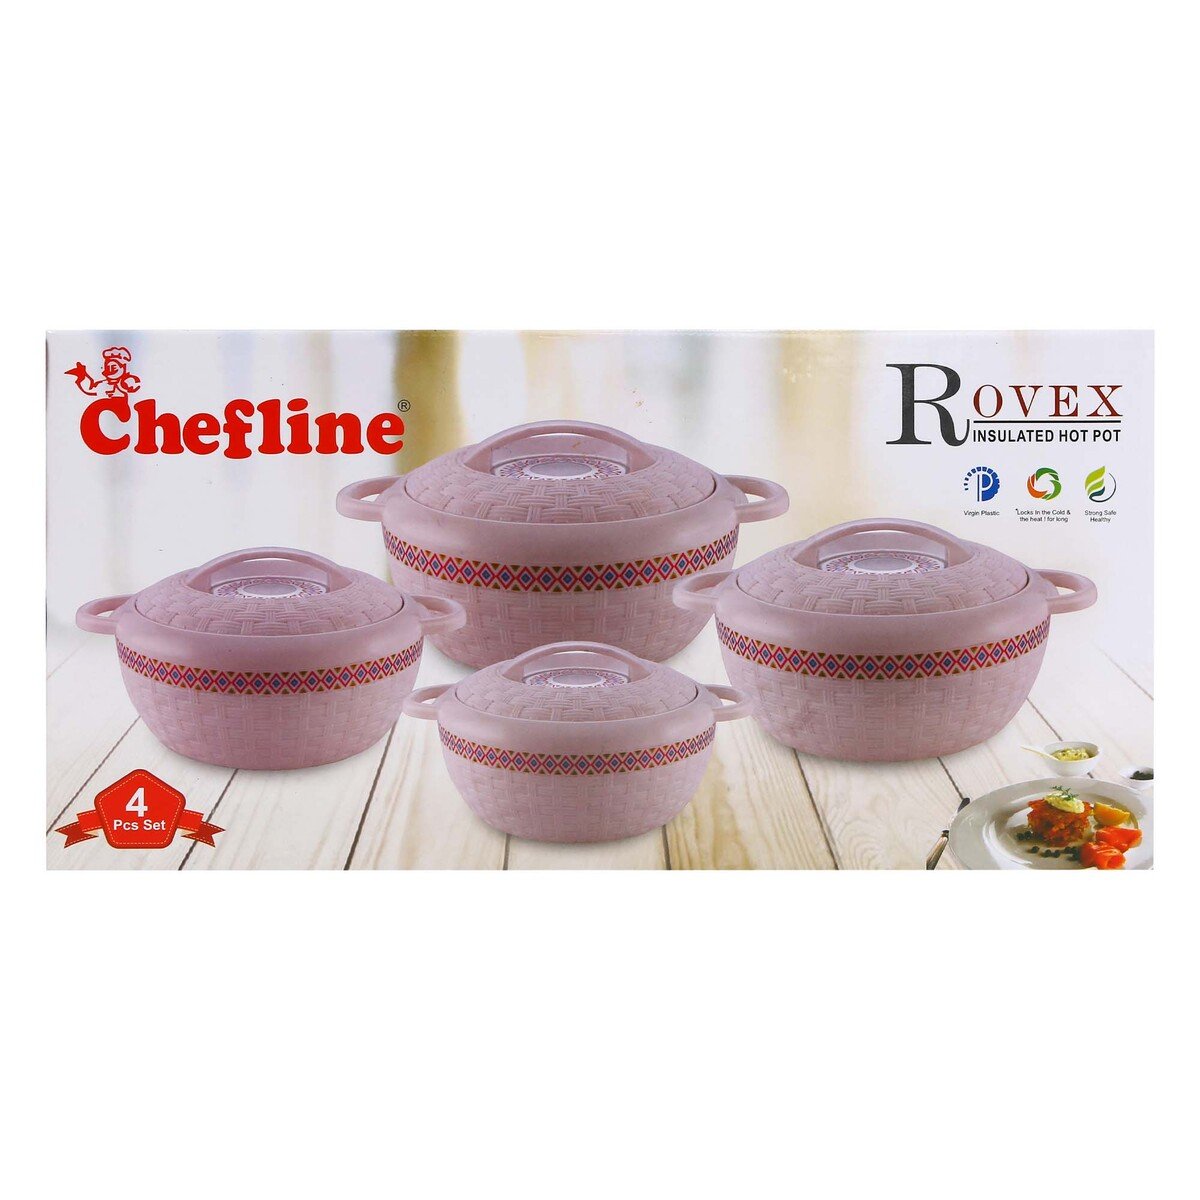 Chefline Hot Pot Plastic ROVEX 8162430W 4pcs